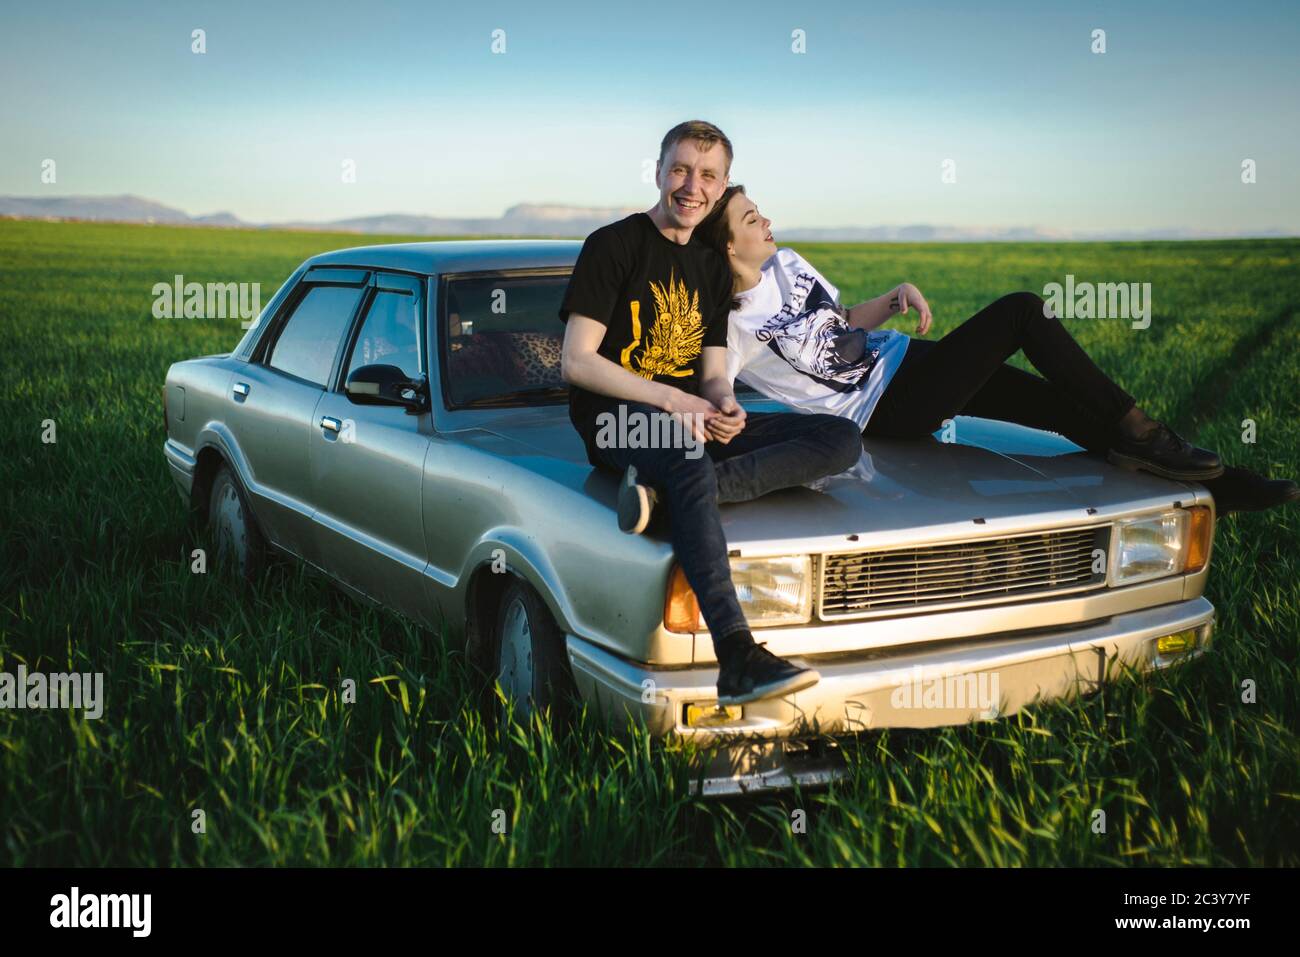 Ukraine, Crimea, Couple sitting on old fashioned car in rural scenery Stock Photo